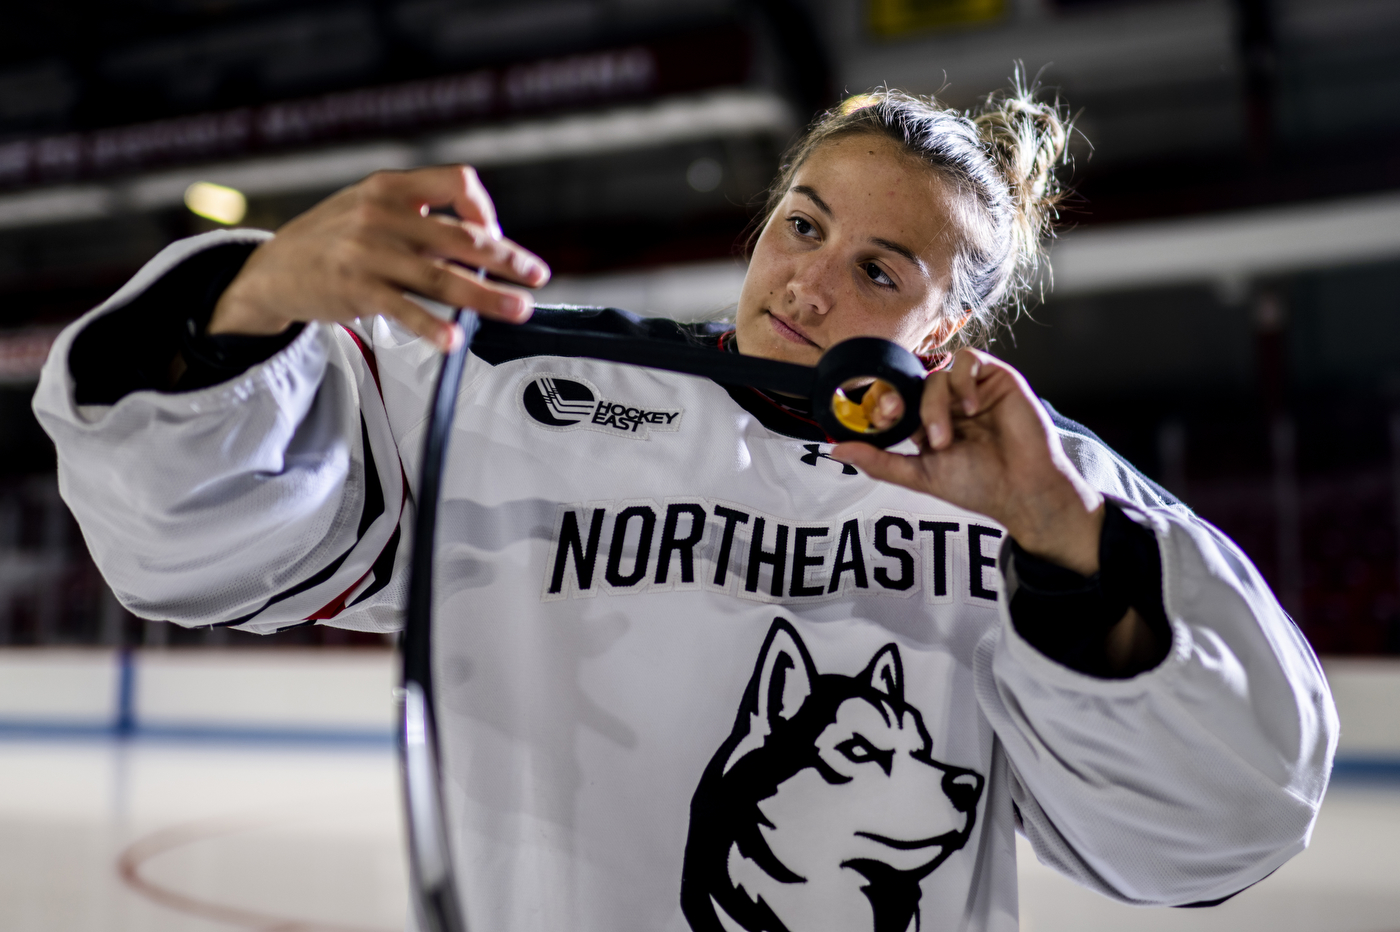 Gwyn Philips, wearing a Northeastern hockey jersey, wraps her hockey stick with black tape